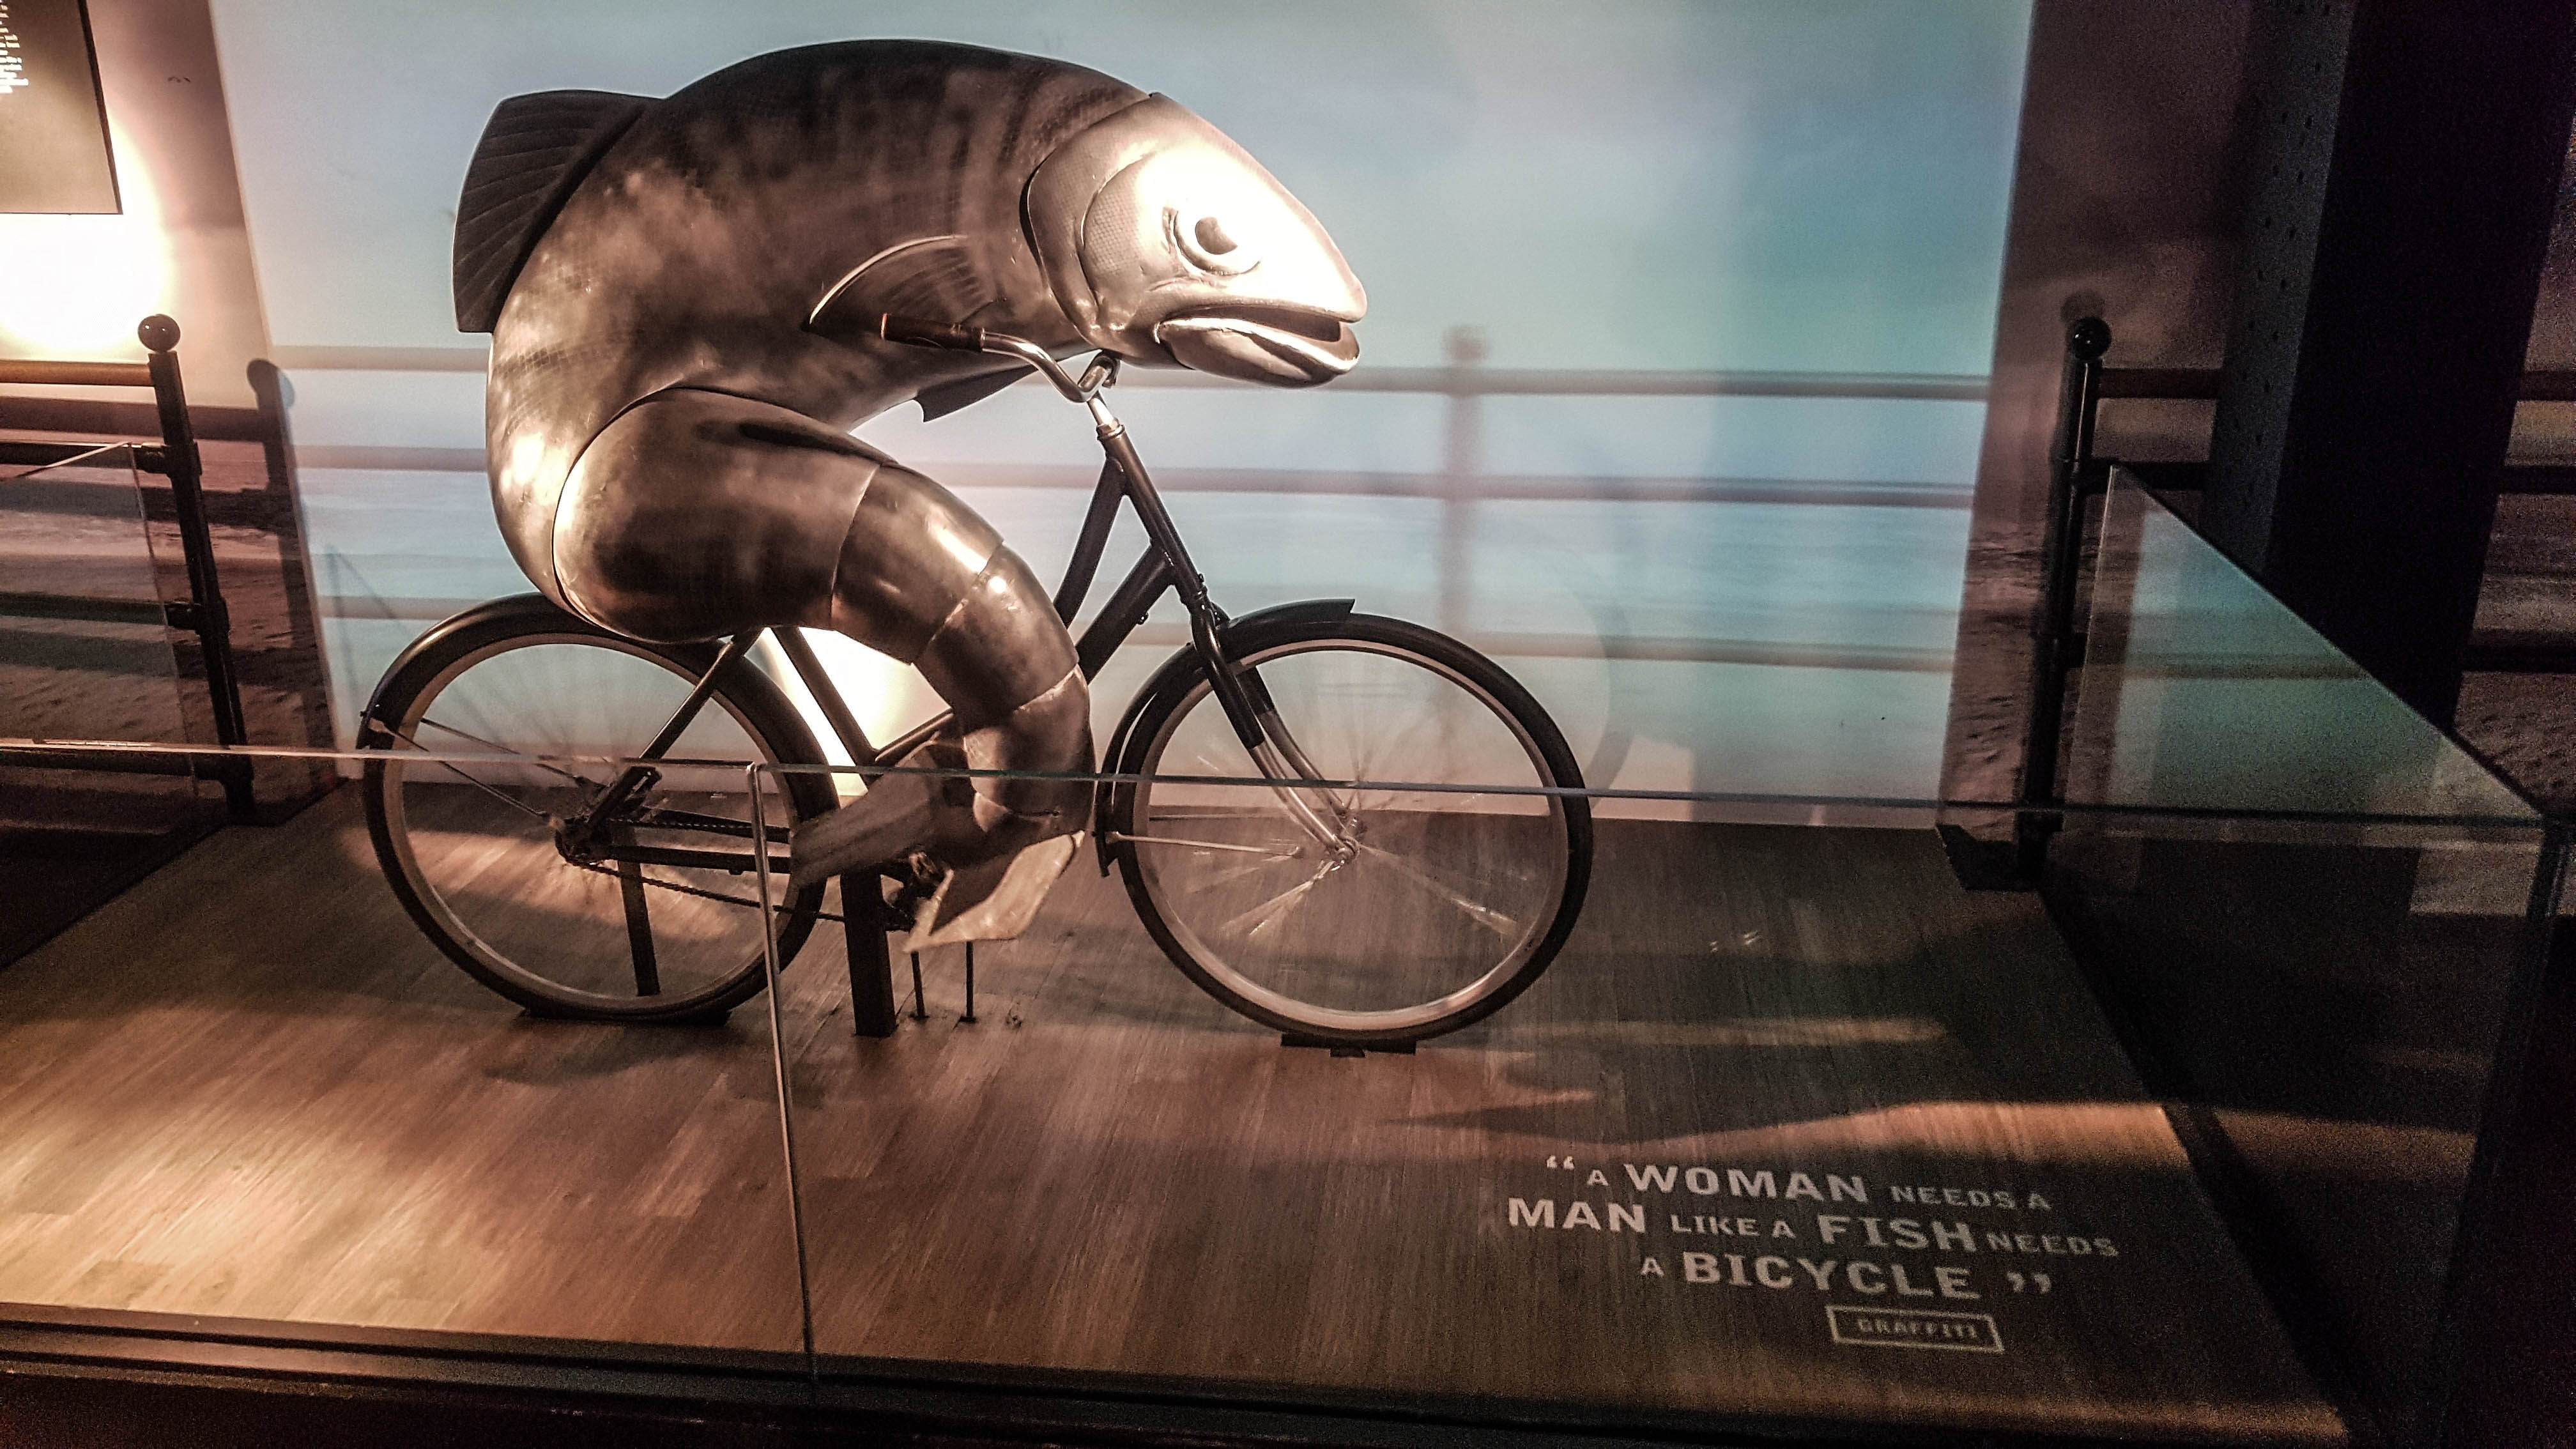 Campaña publicitaria de Guinness: Fish on a bicycle